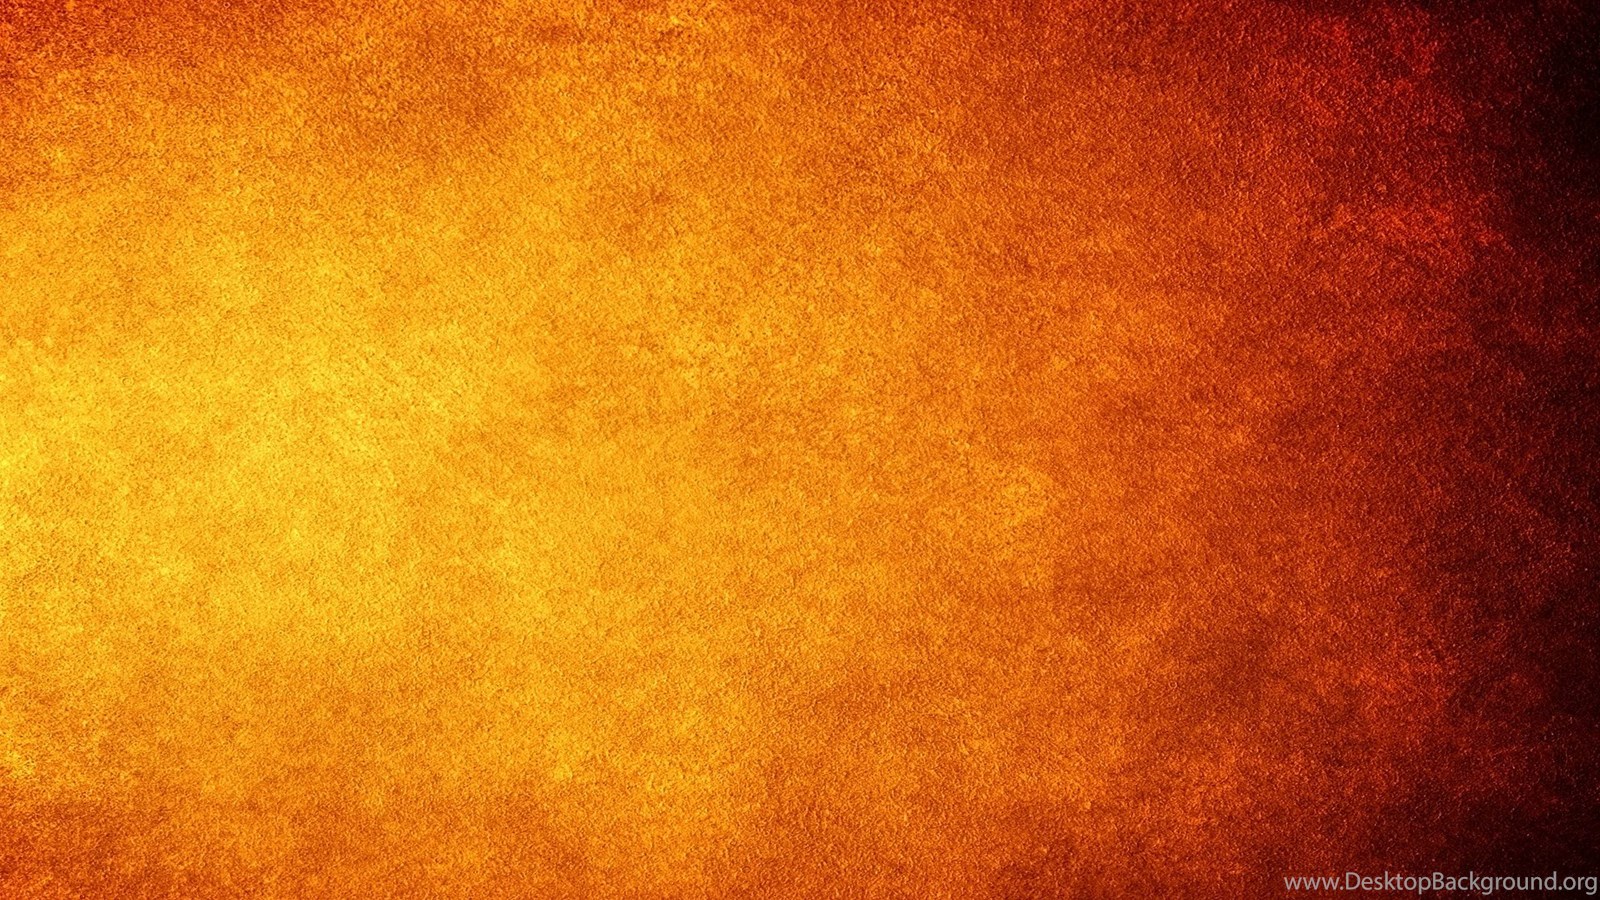 Cool Orange Backgrounds Wallpapers Cave Desktop Background